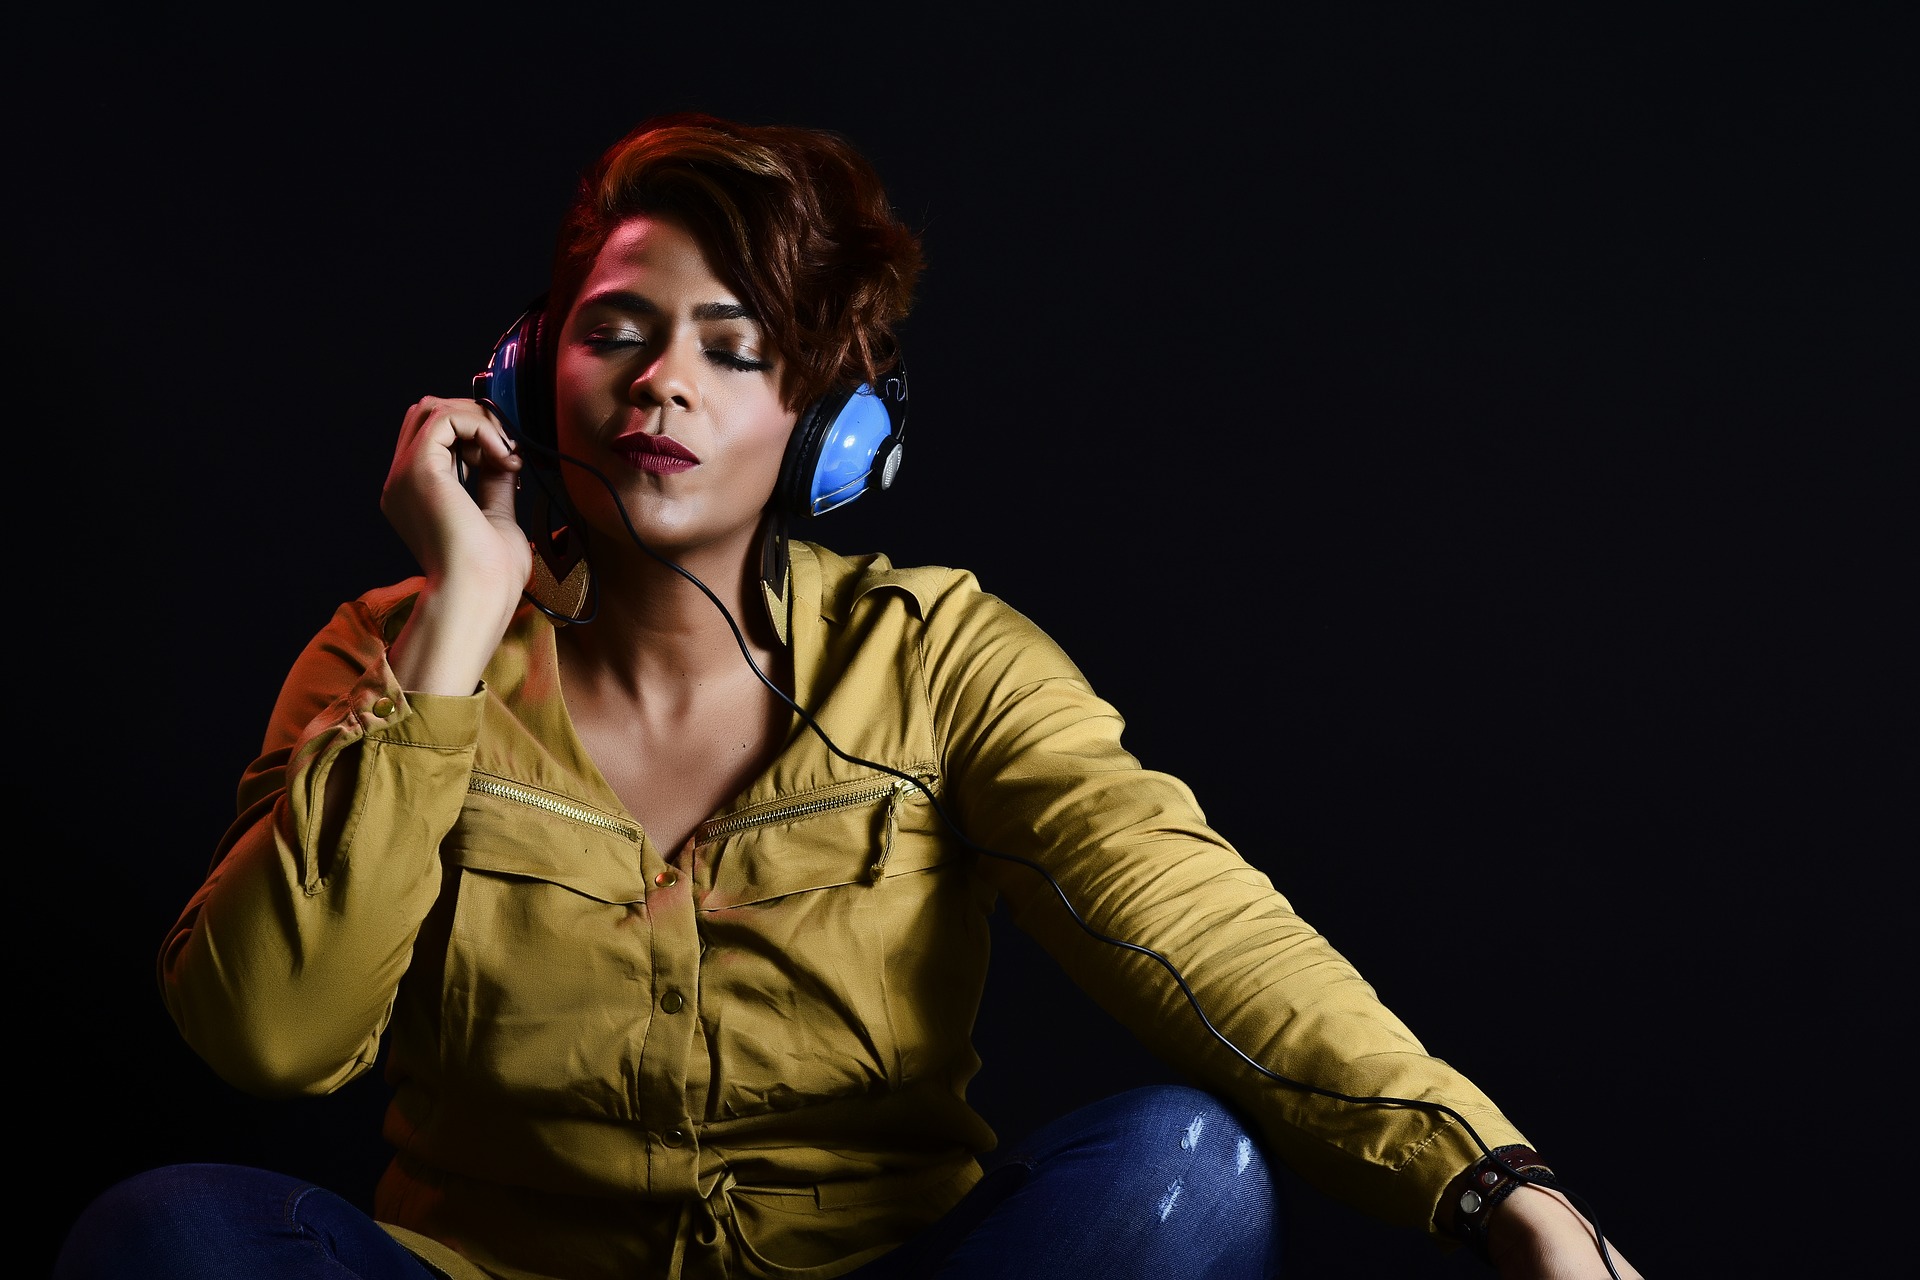 Woman with headphones.